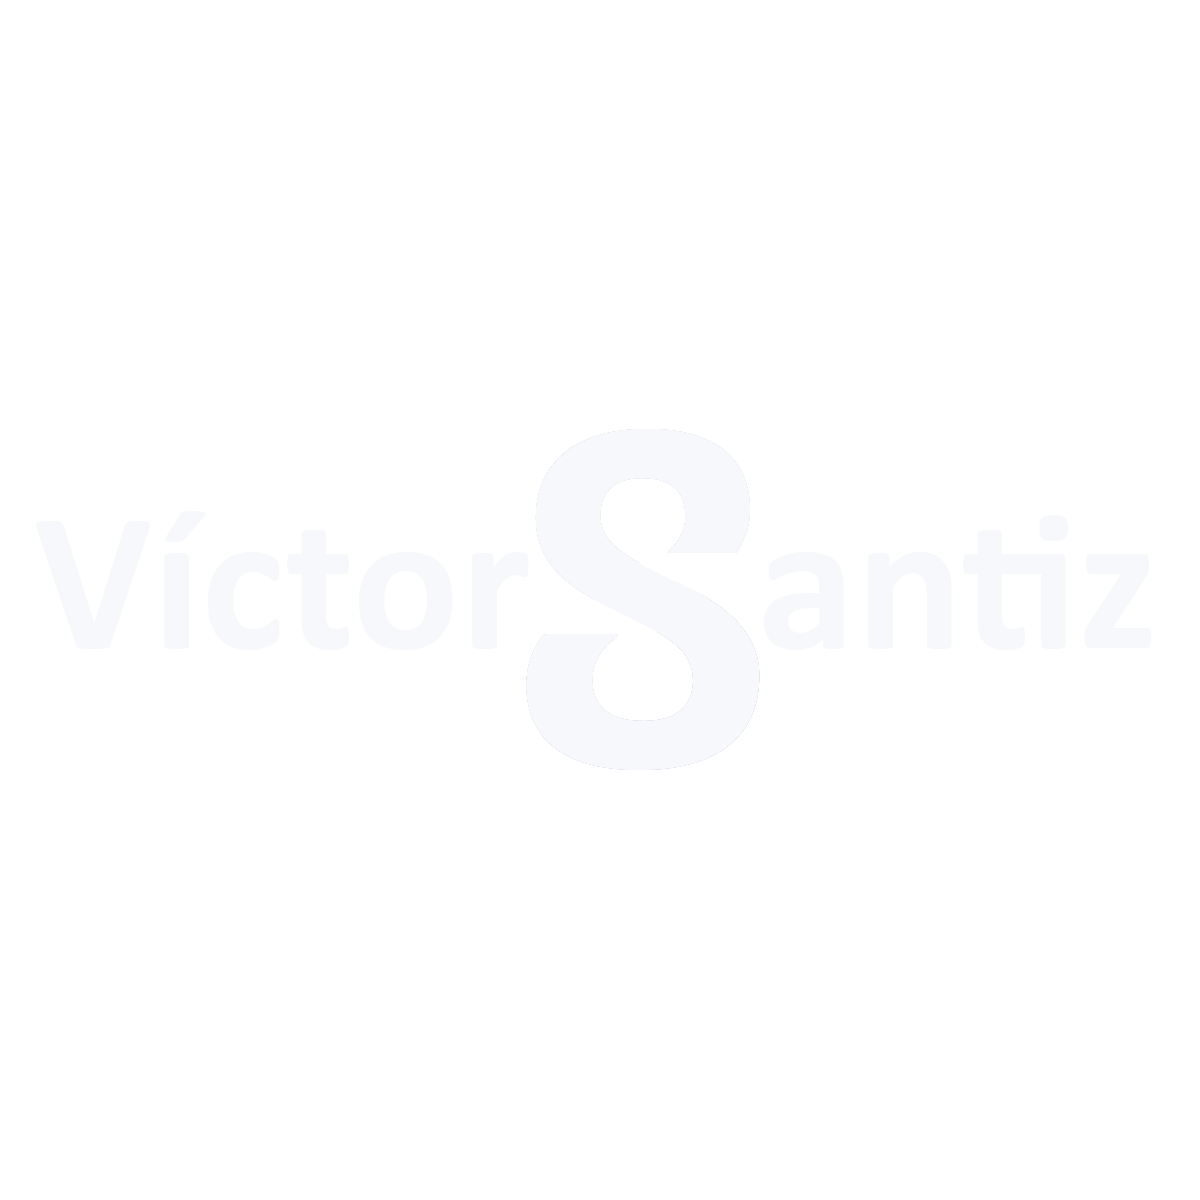 Victor Santiz